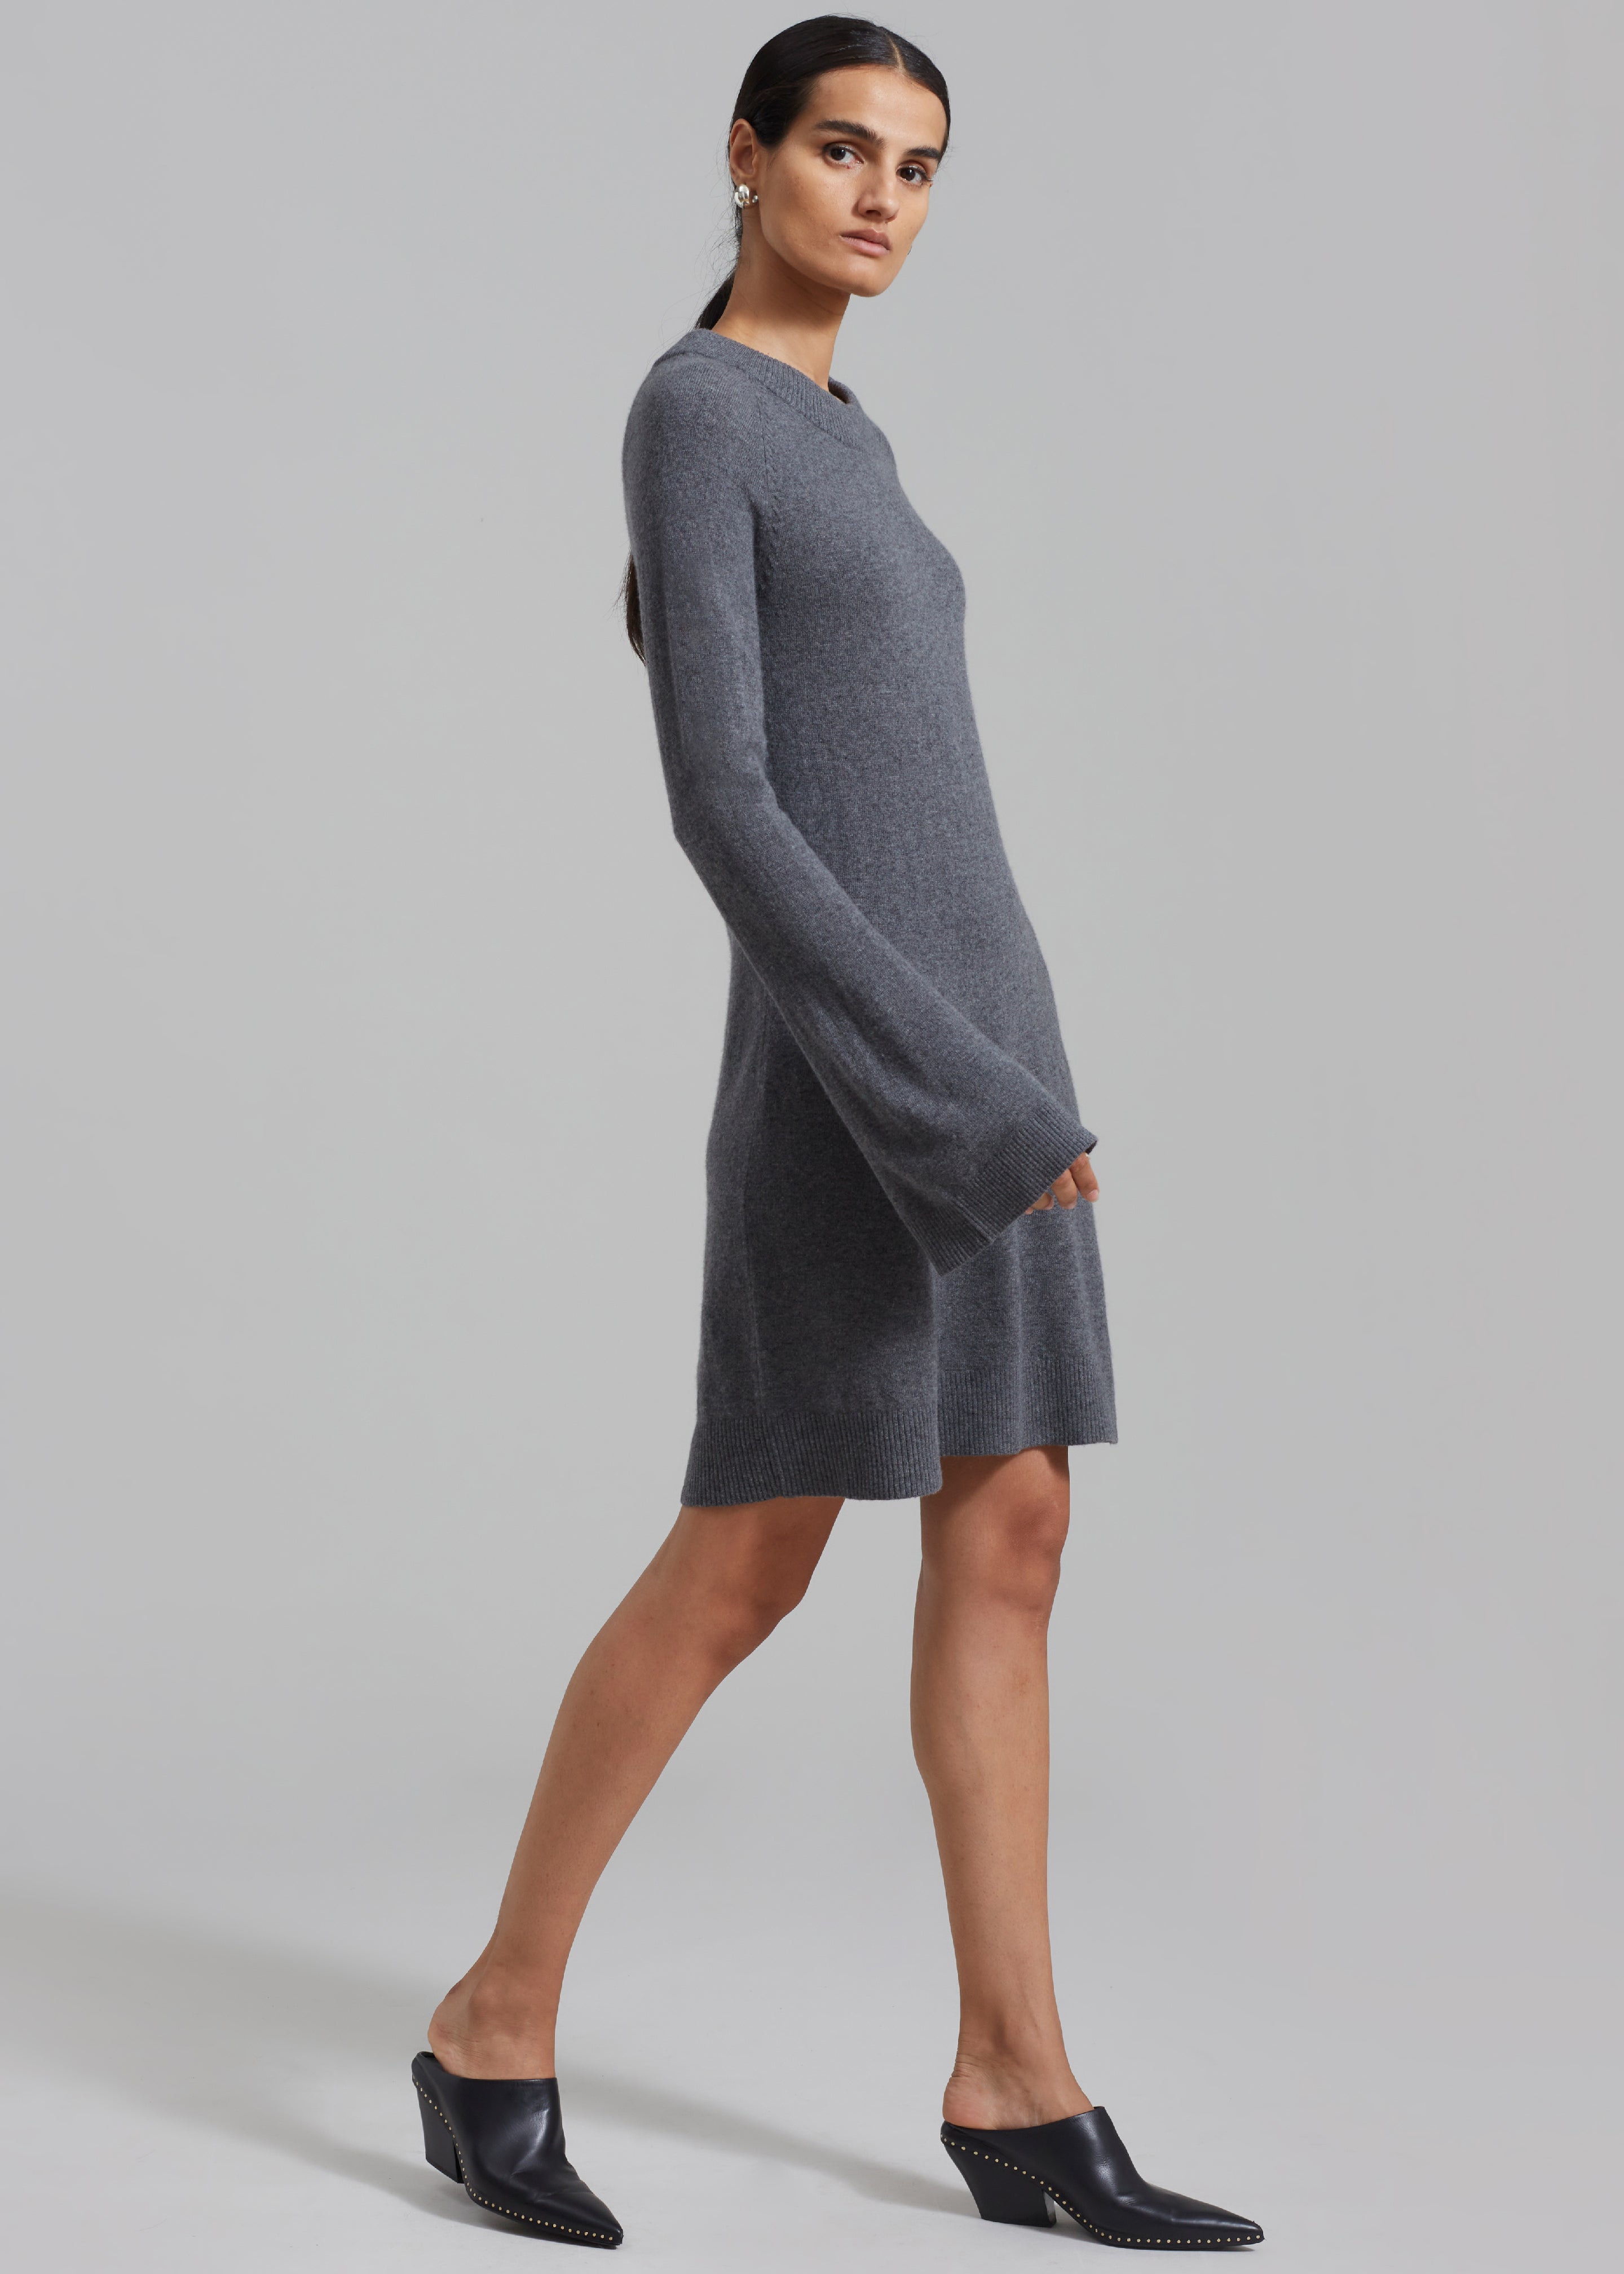 The Garment Como Raglan Dress - Grey Melange - 4